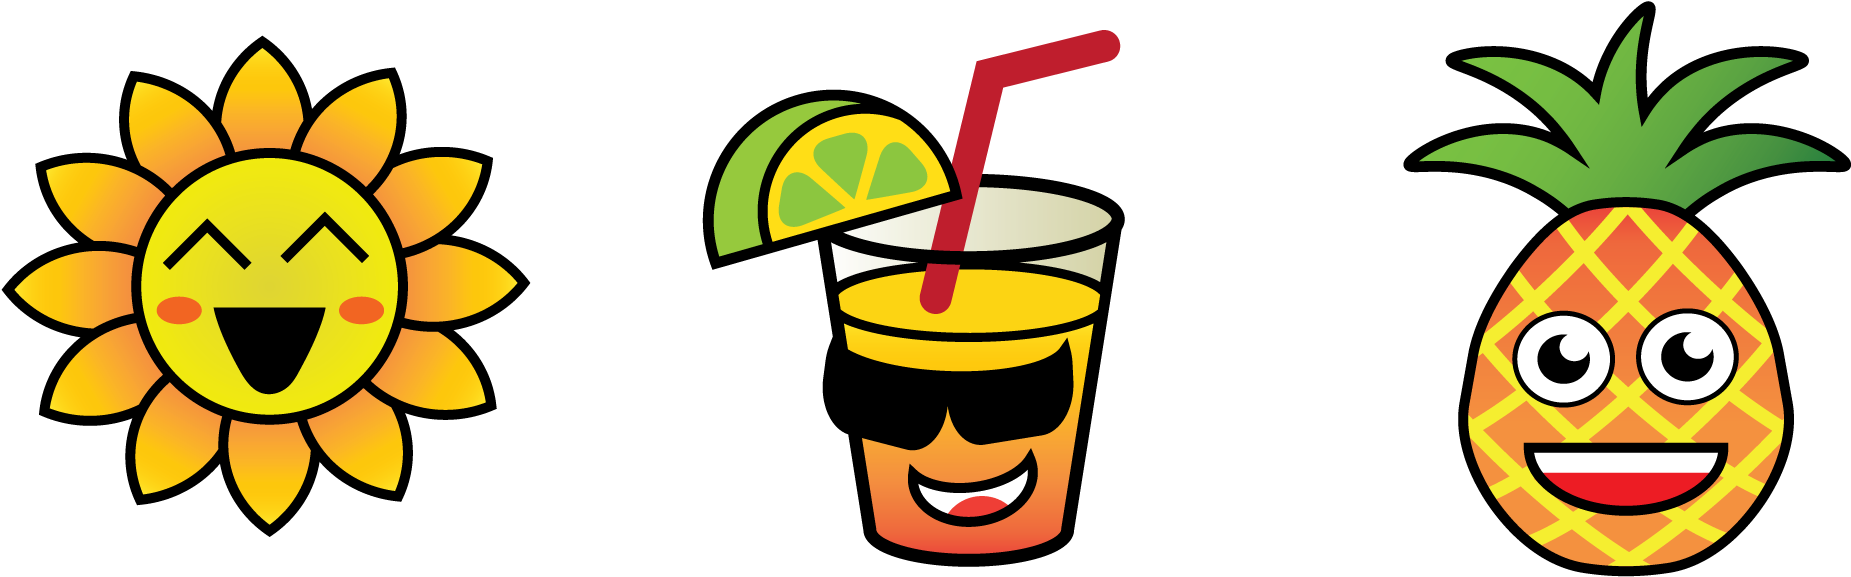 Animated Summer Emojis PNG image